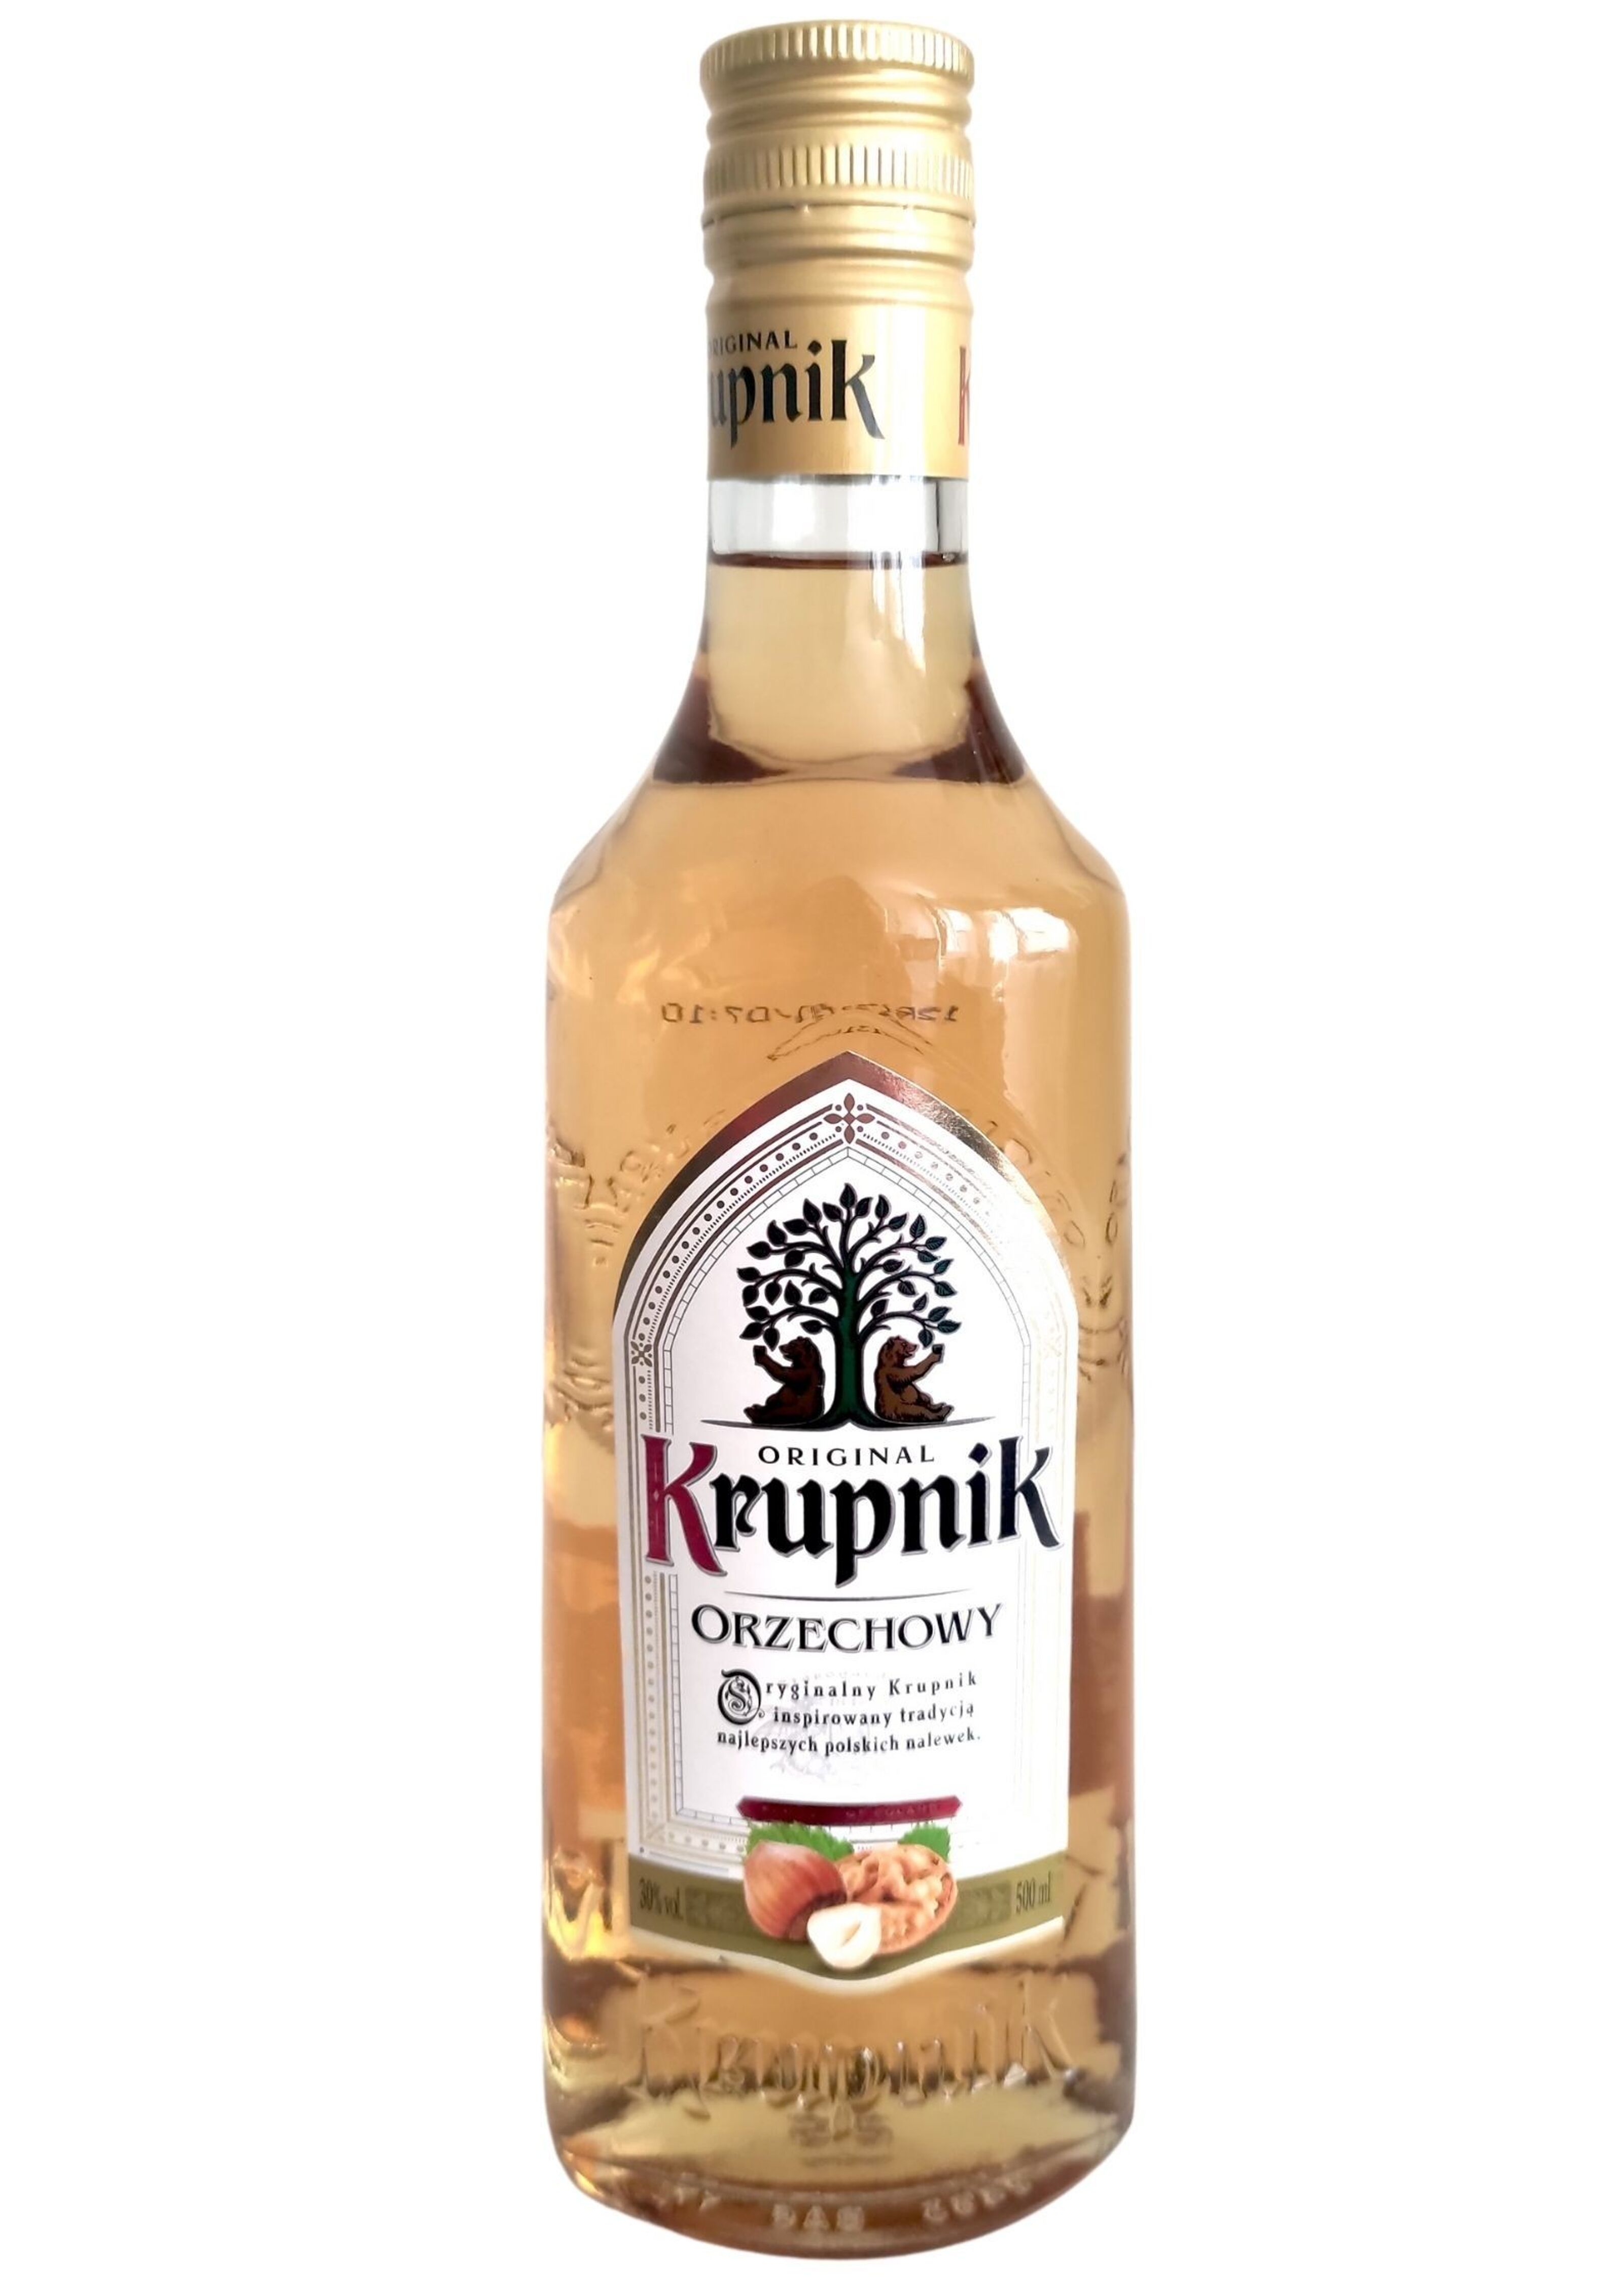 Krupnik vodka Polish wholesale - Buy Hazelnut and Walnut Vodka